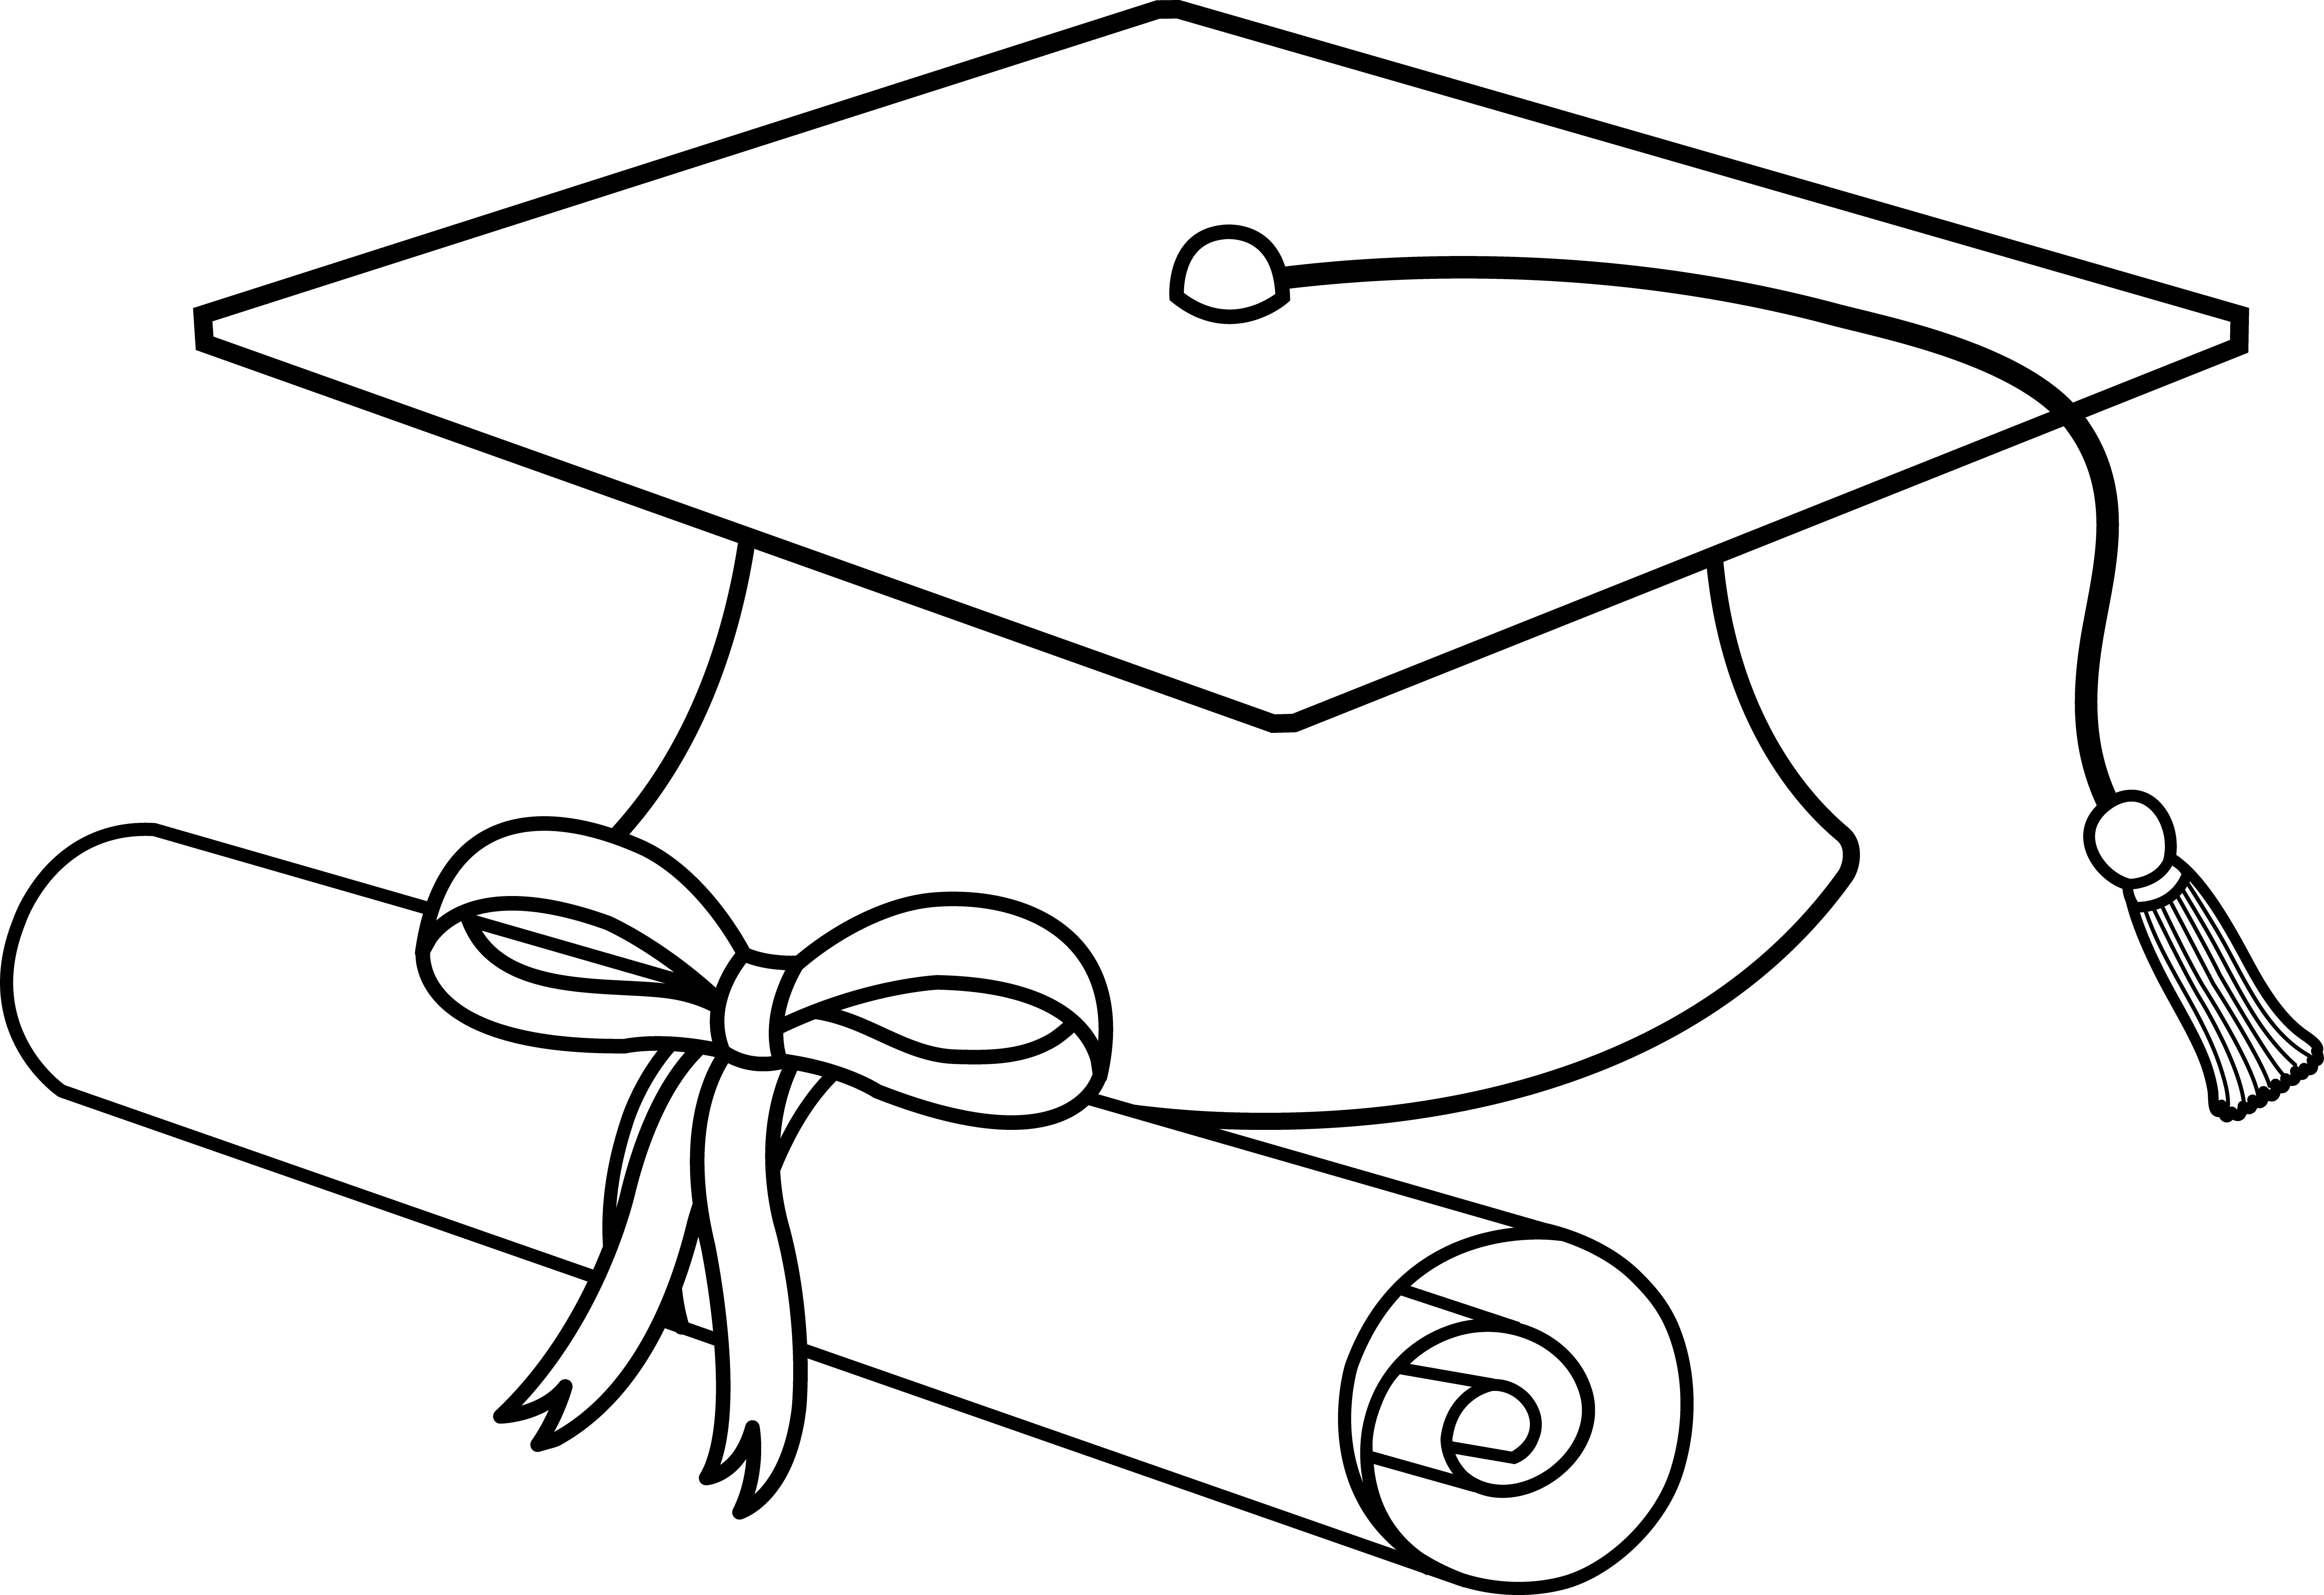 Free Graduation Cap And Diploma Clipart Download Free Clip Art Free Clip Art On Clipart Library